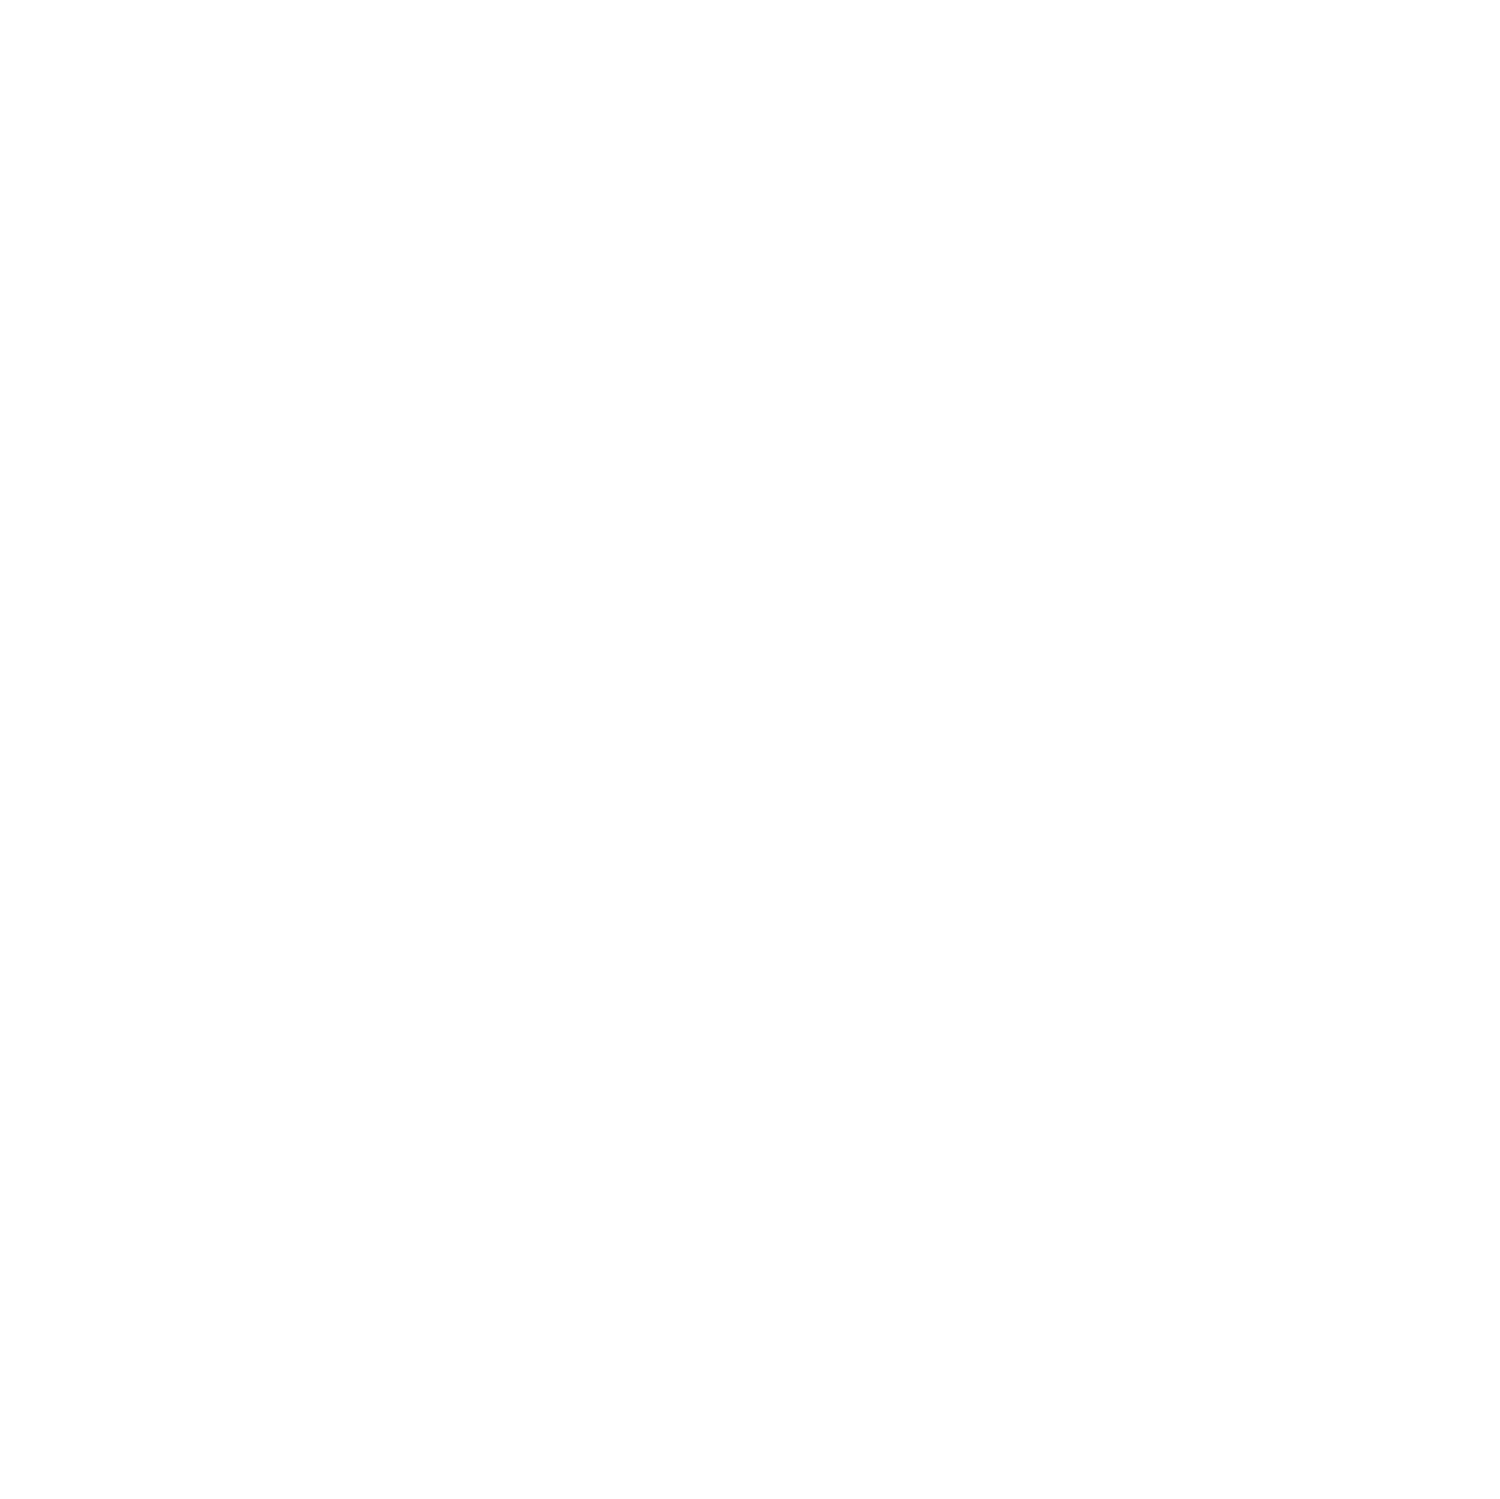 ONE LIGHT INTERIORS